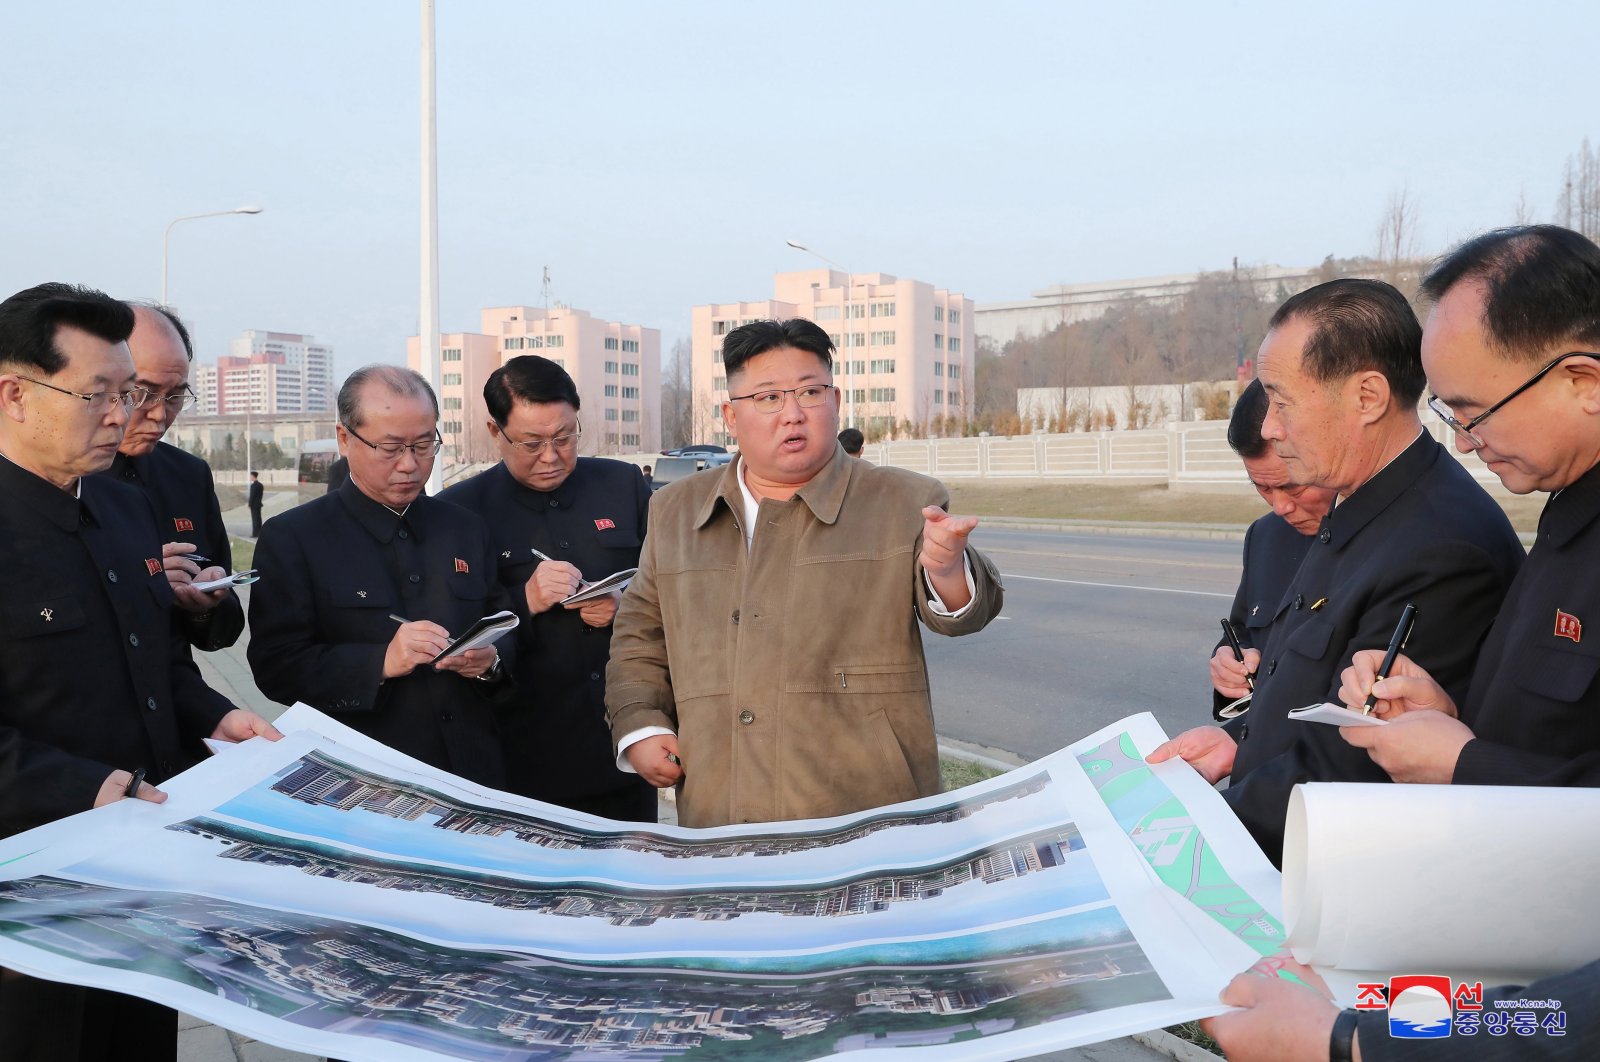 North Korean leader Kim Jong Un (C) visites the construction site for terraced apartment buildings along the Pothong River in North Korea, April 1, 2021. (EPA Photo)